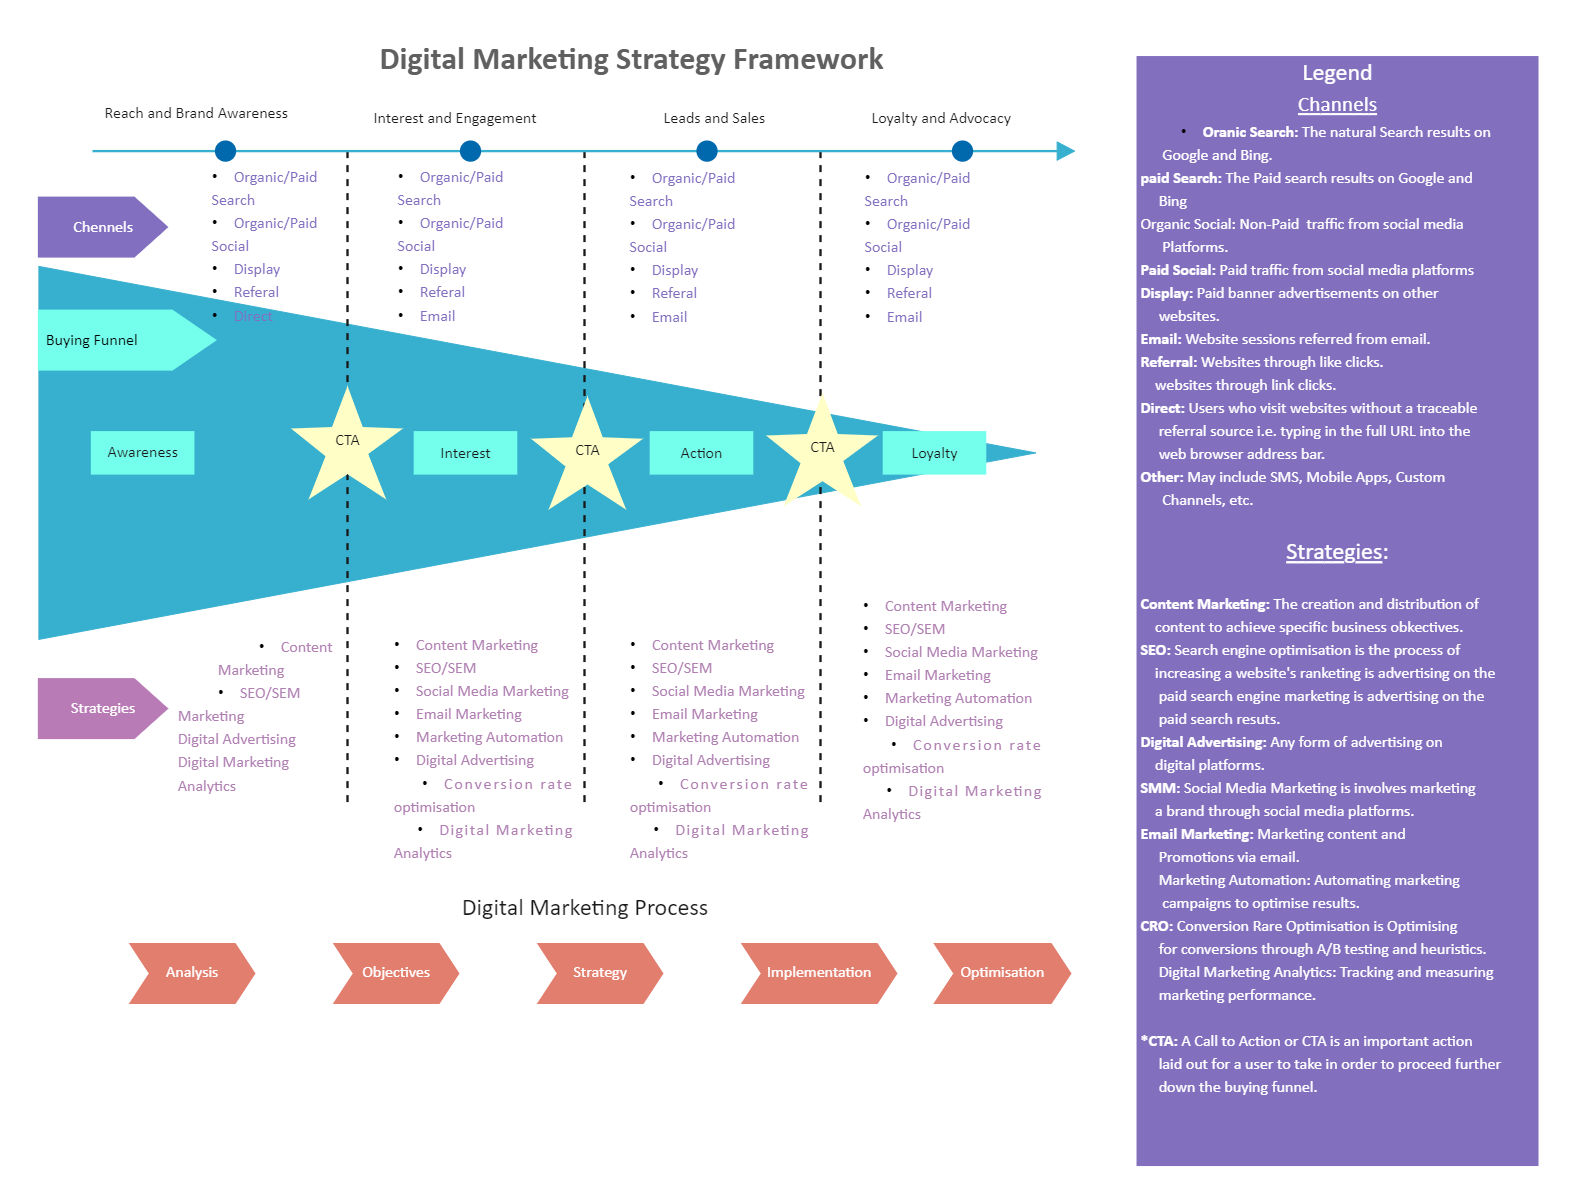 Equinet Digital Marketing Strategy Framework